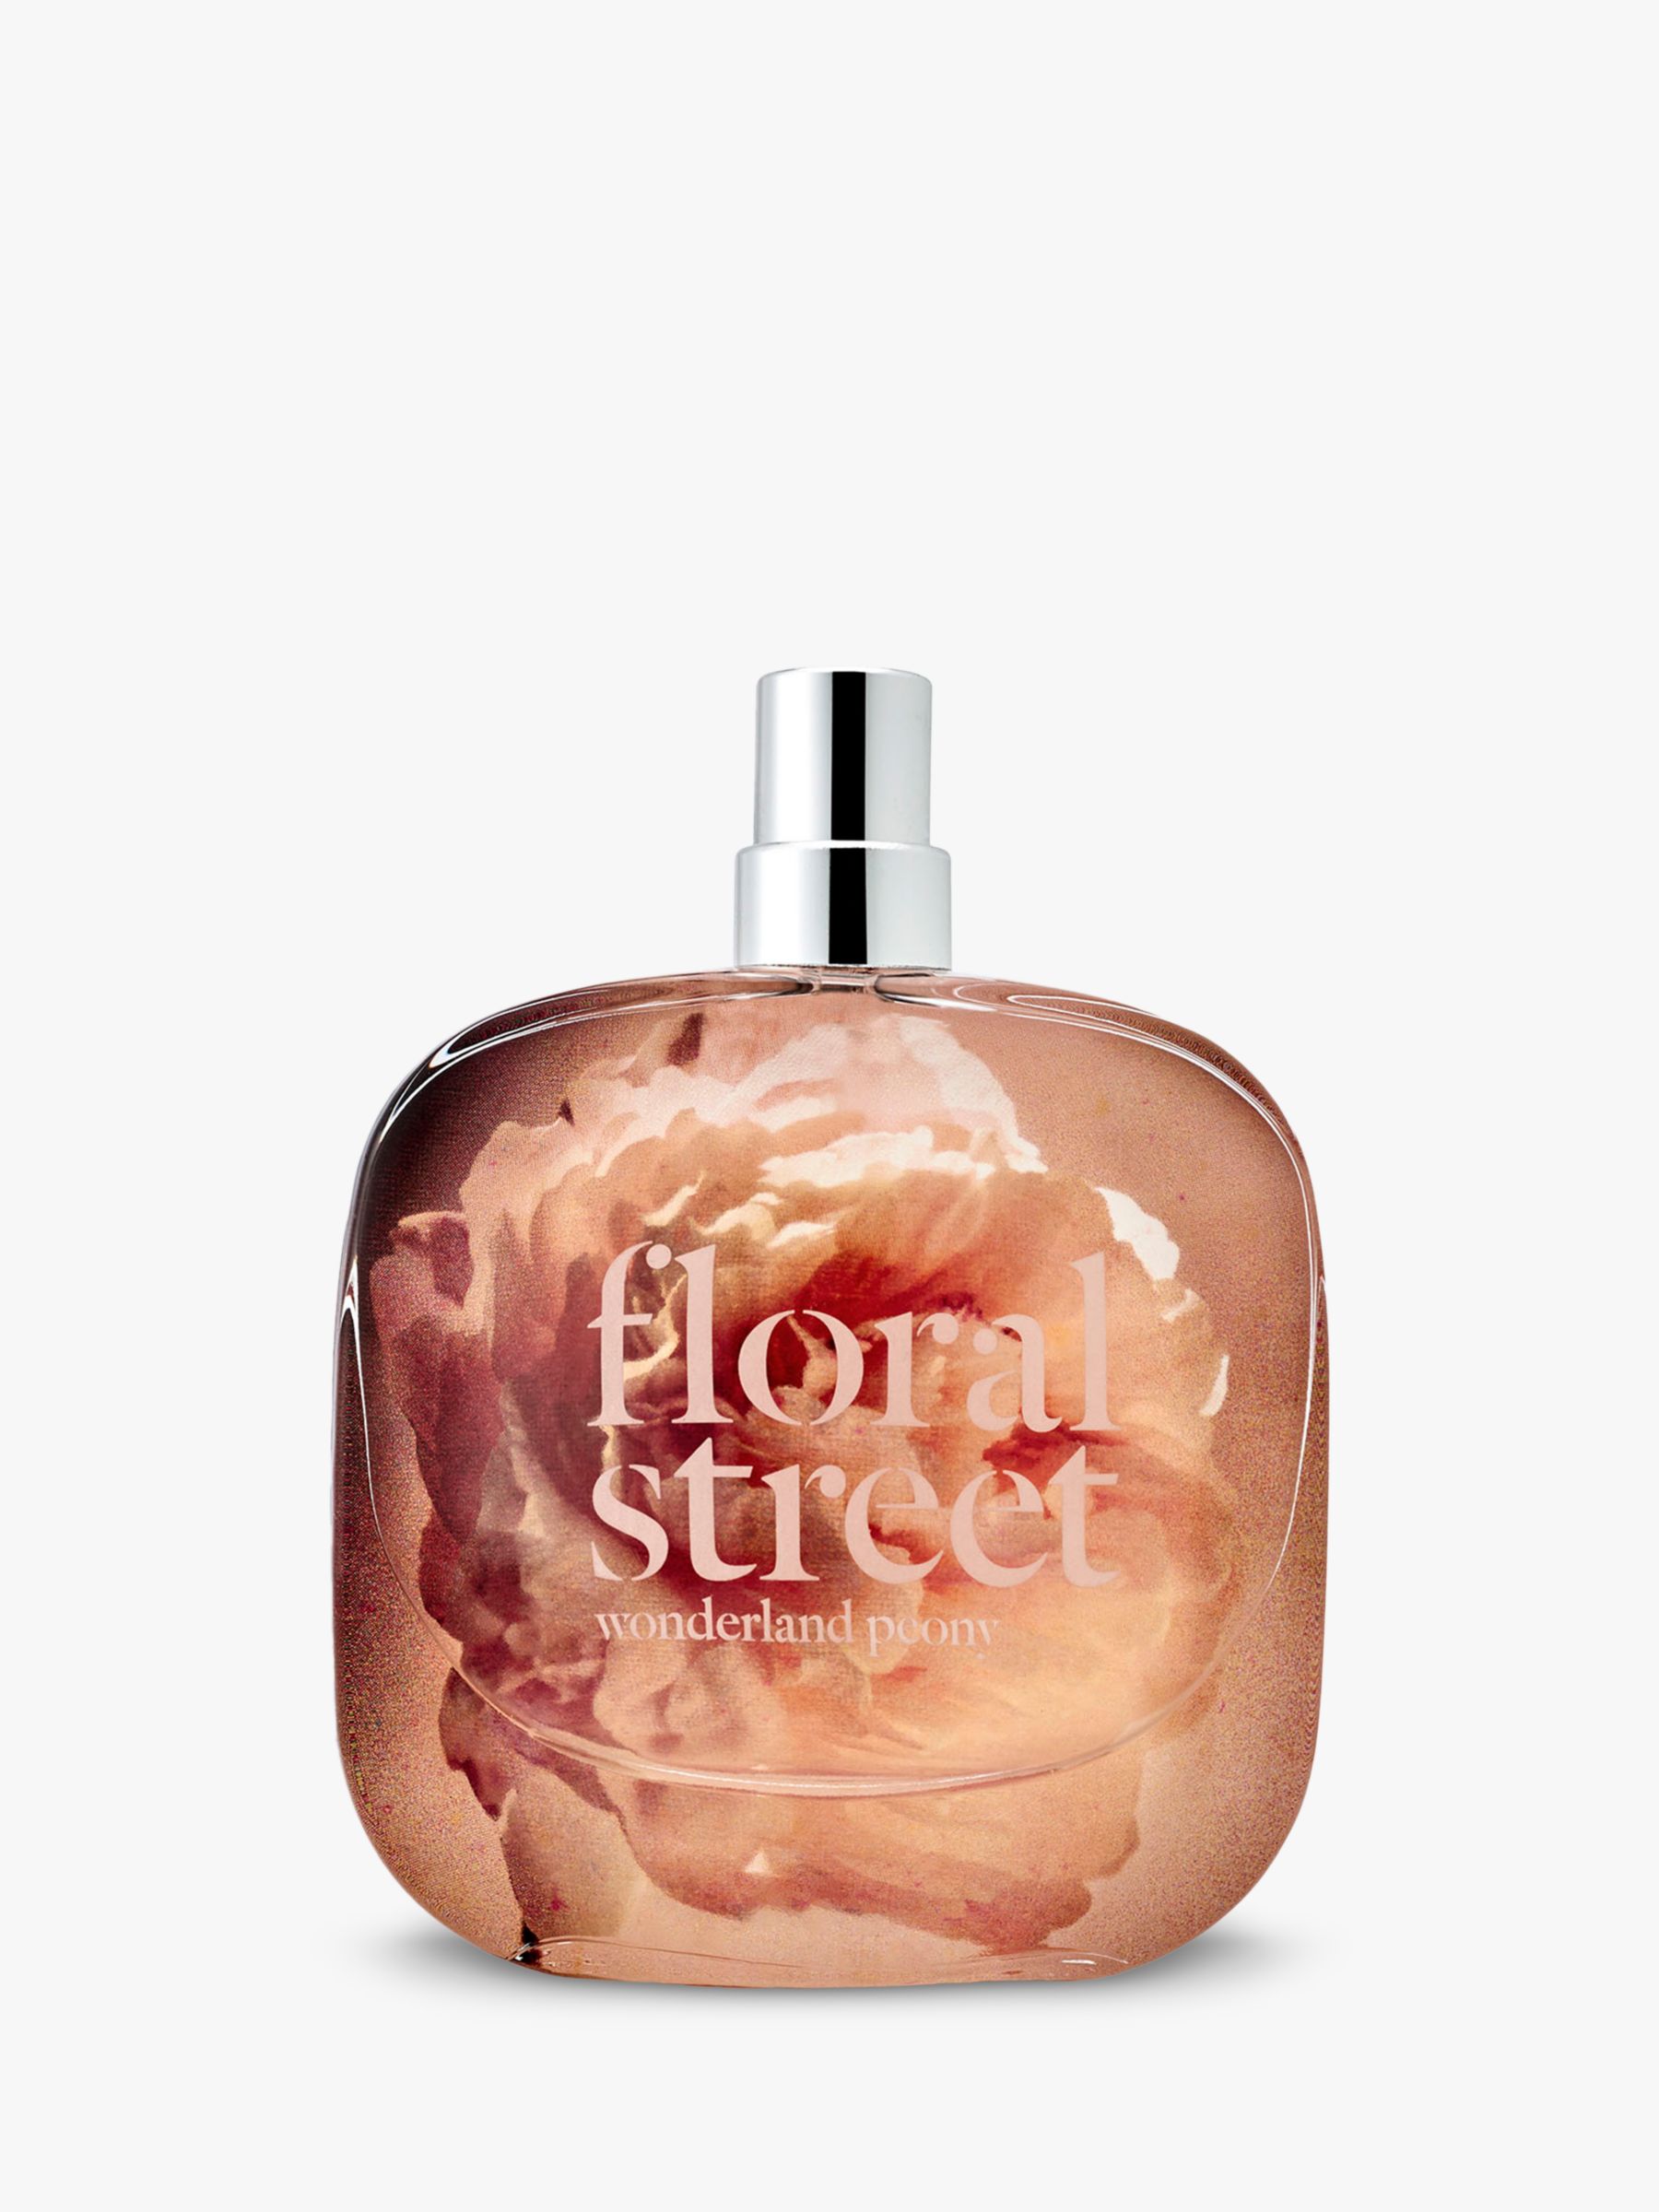 Floral Street Wonderland Peony Eau de Parfum, 50ml 1